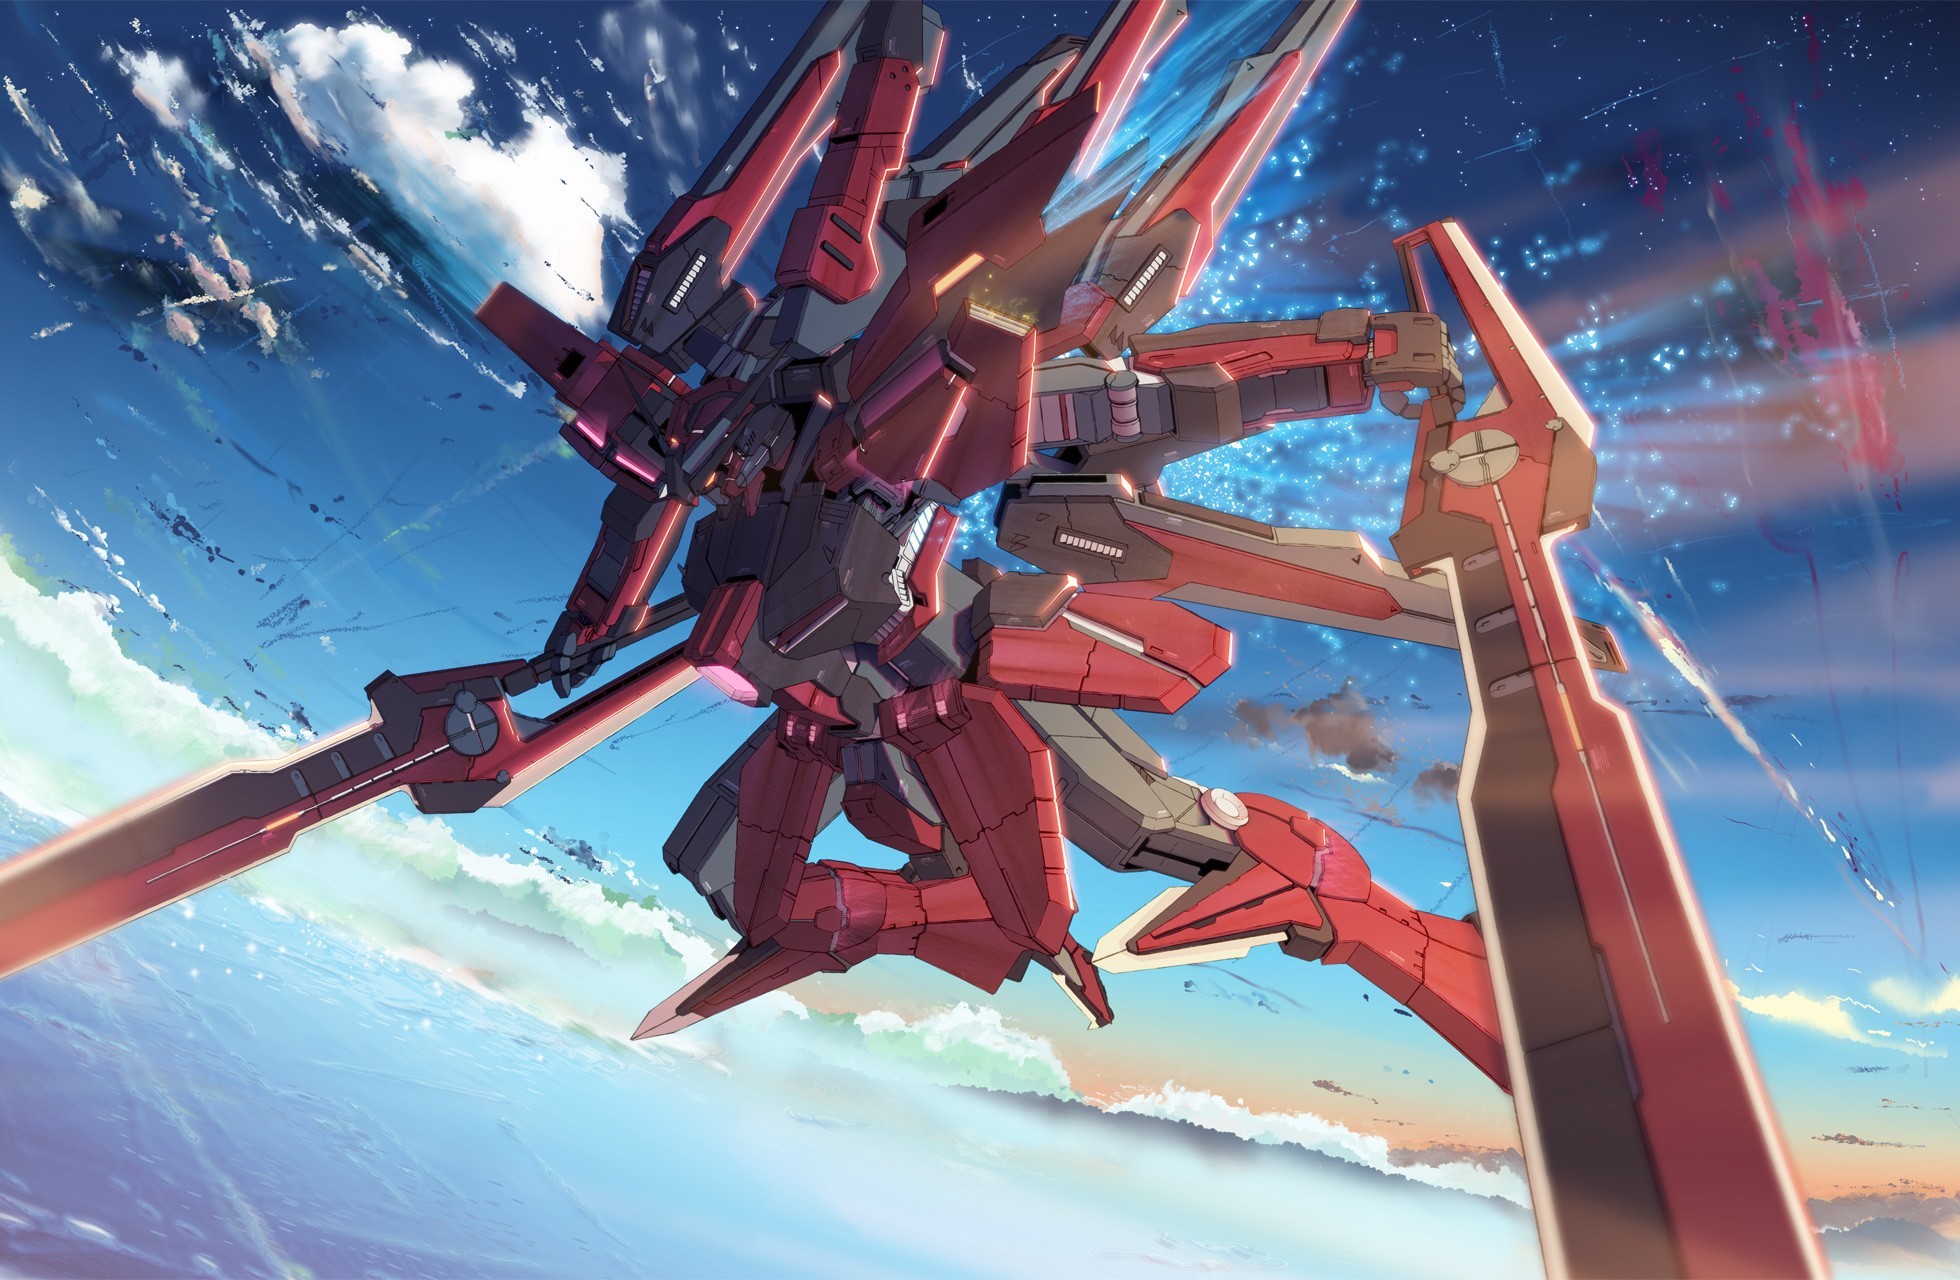 Mecha gundam wing anime skyscapes wallpaper 11447 WallpaperUP